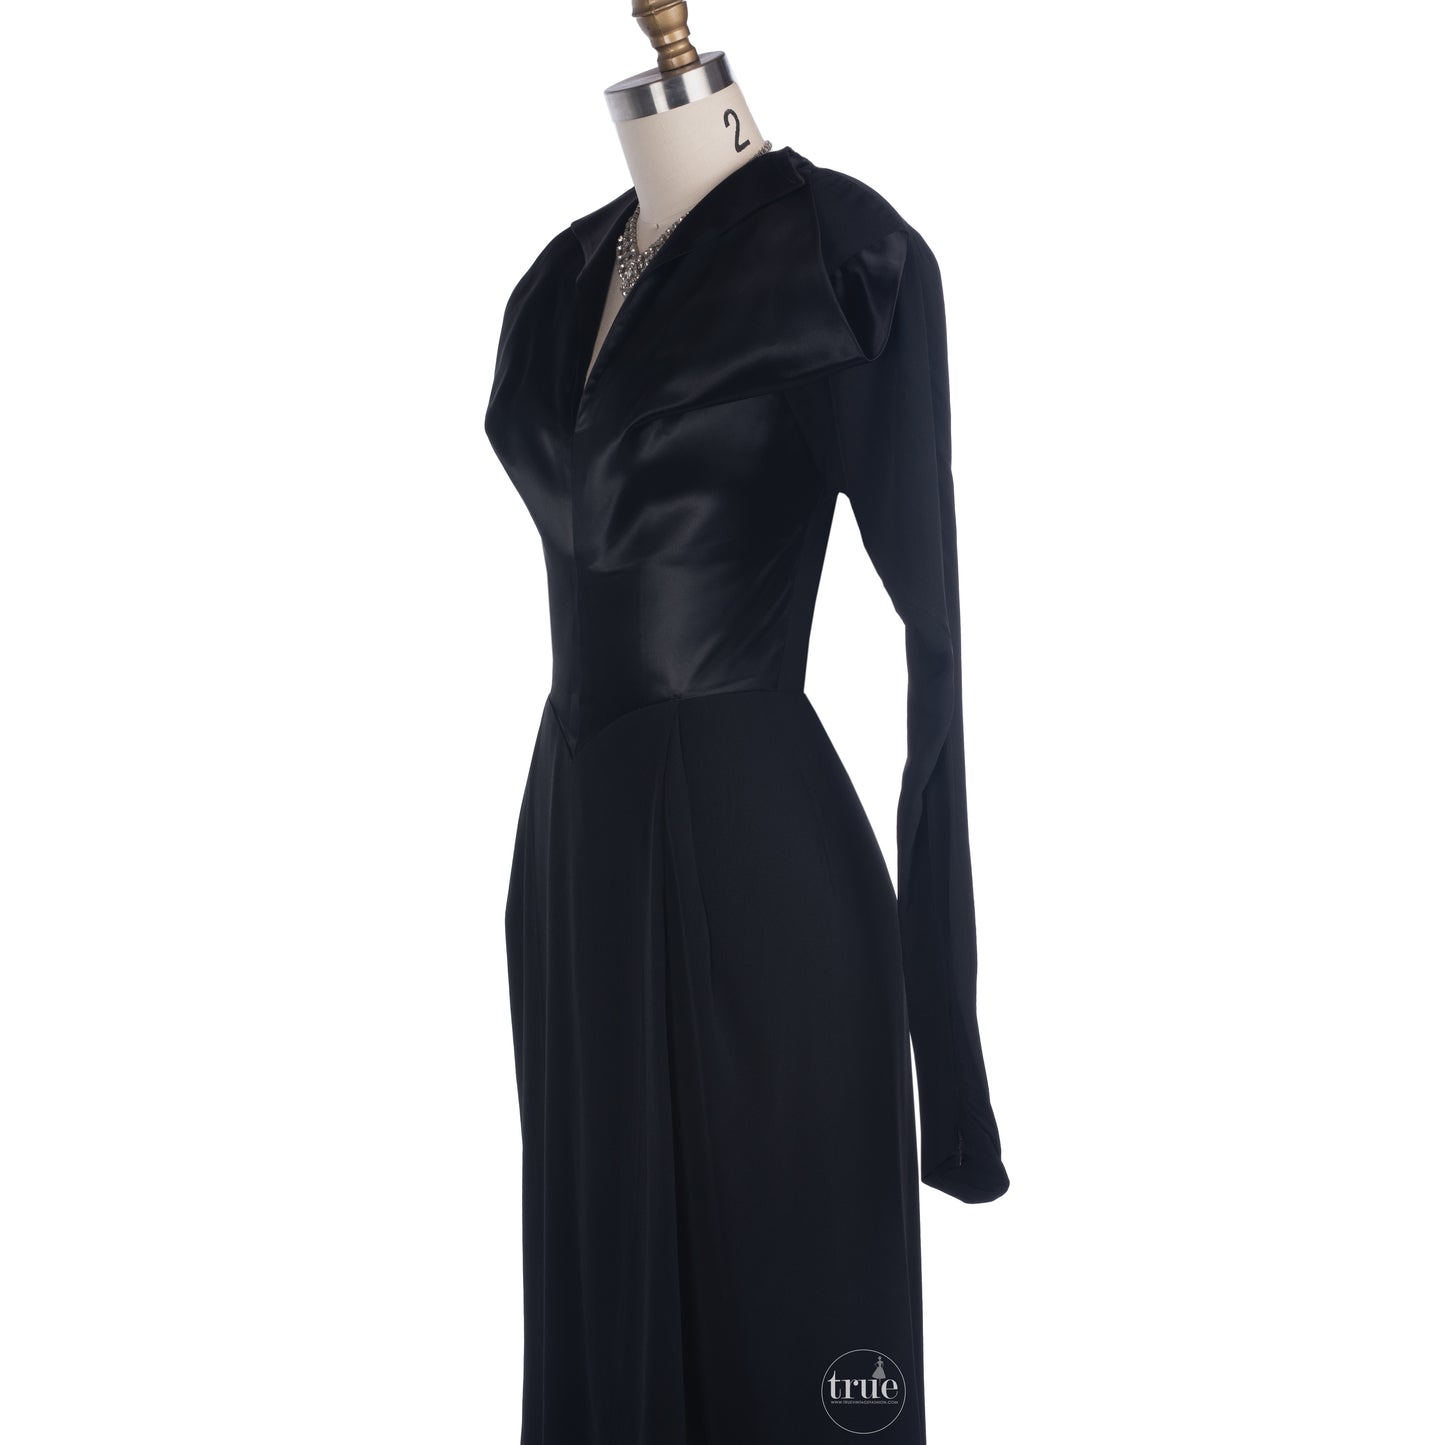 vintage 1940s dress